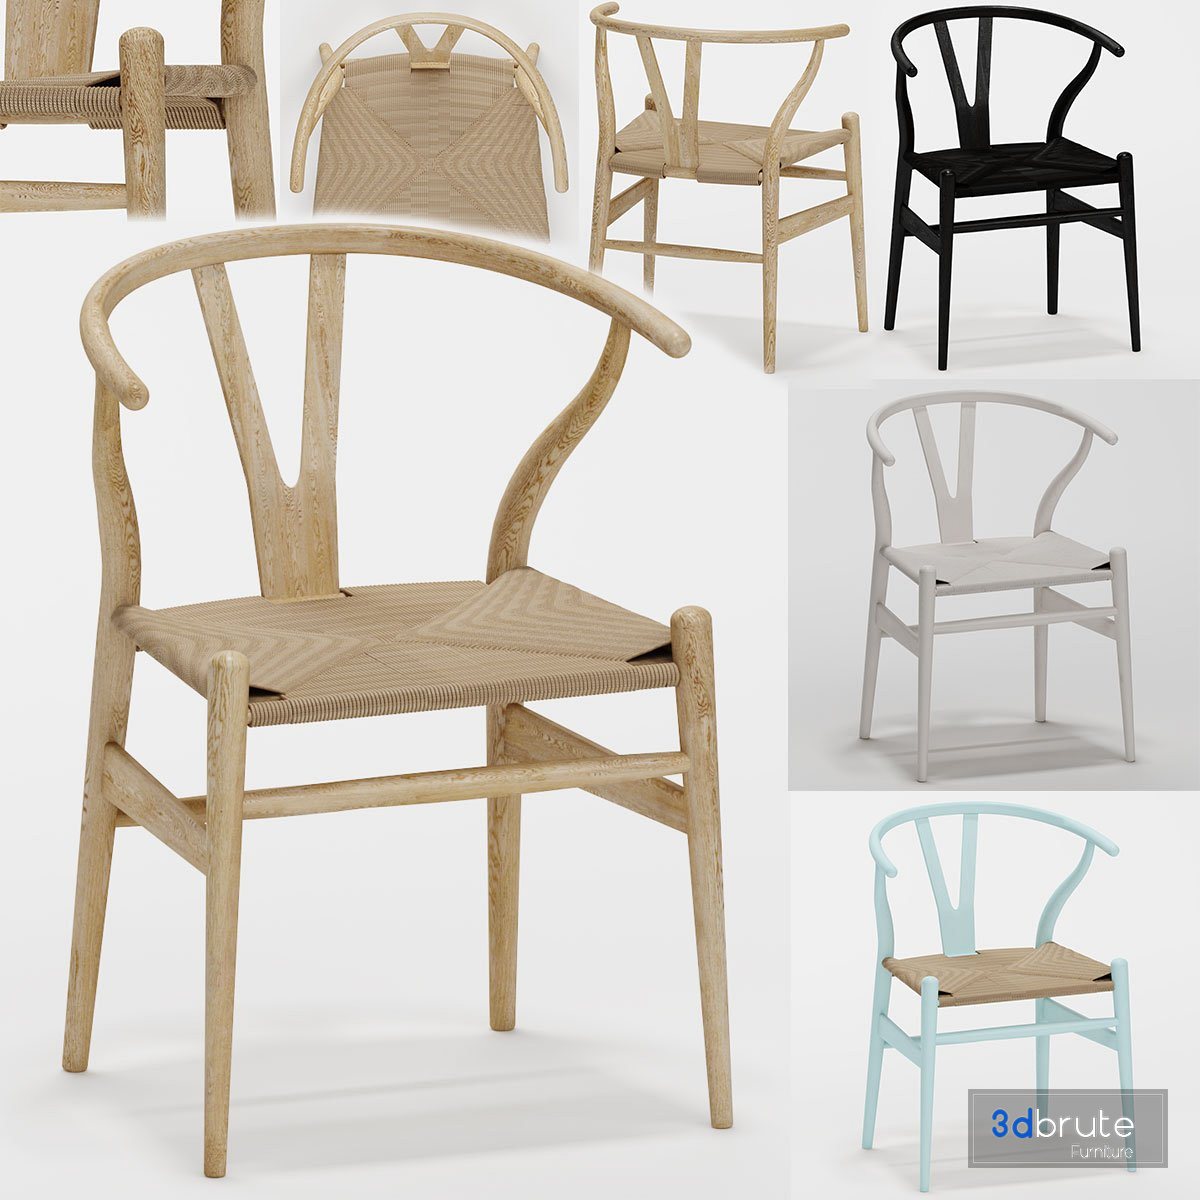 There is four chairs. Простые стул кресло модели для 3д моделирования.